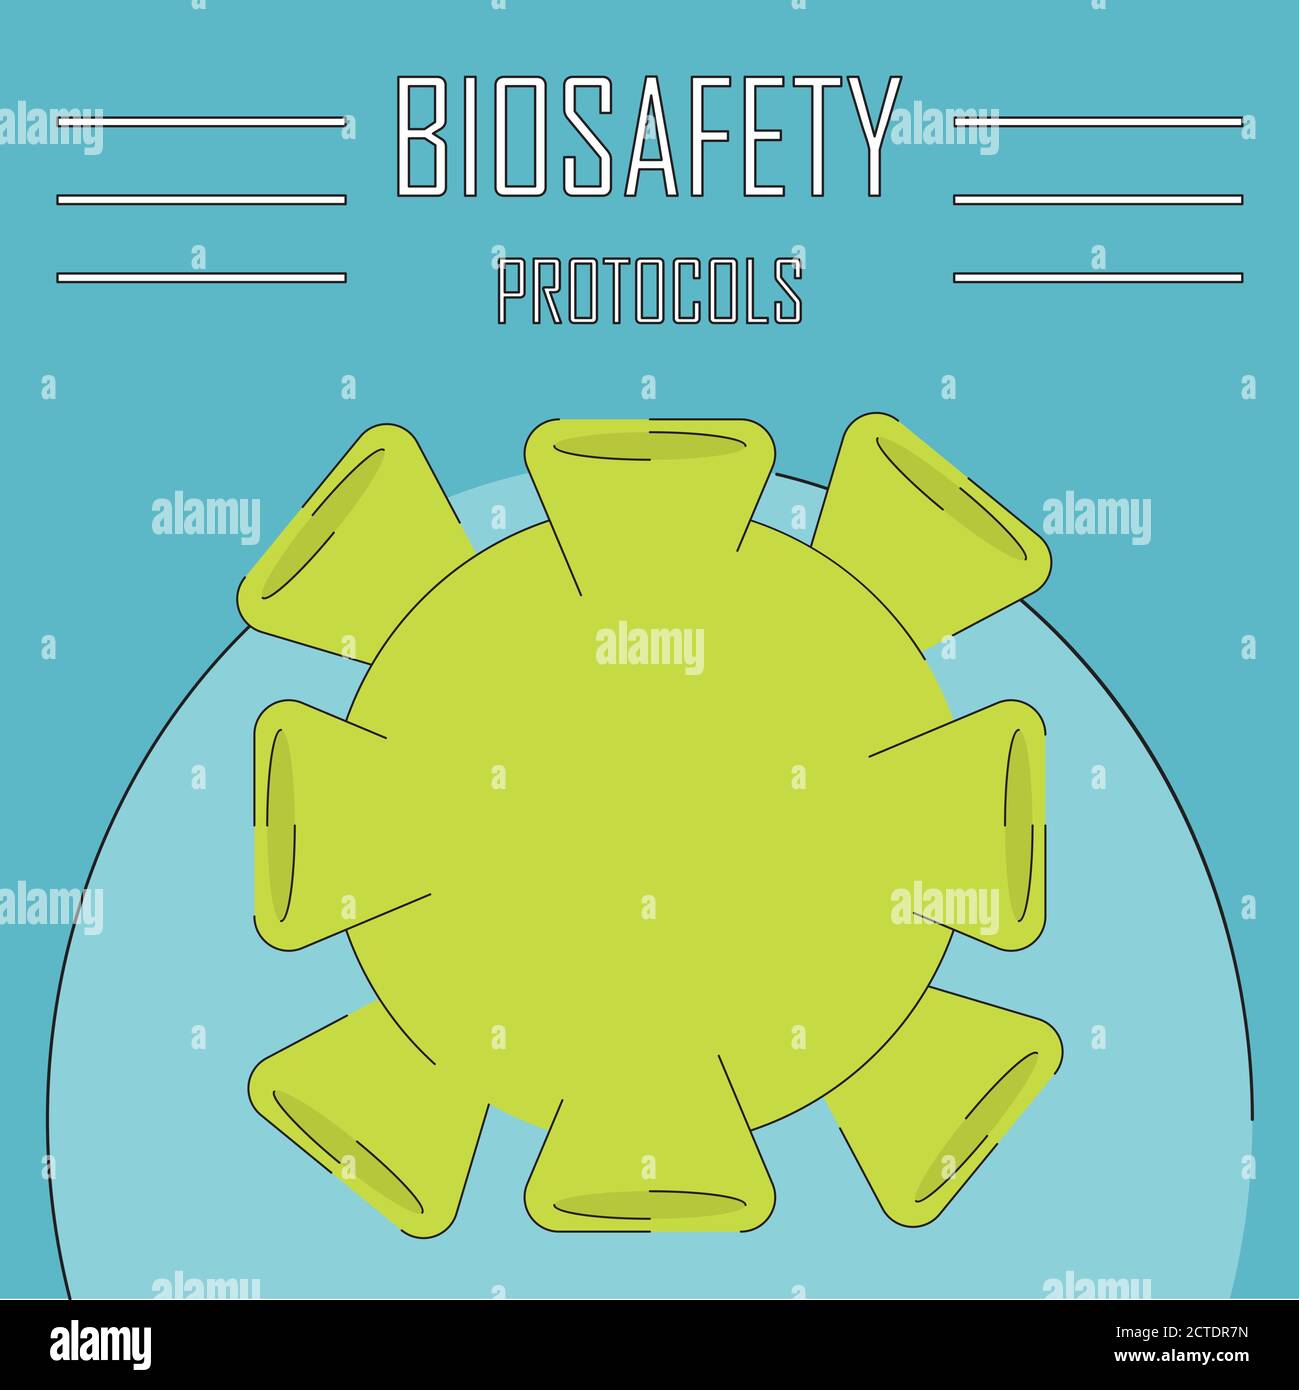 Biosafety protocols poster. Coronavirus protection - Vector illustration Stock Vector